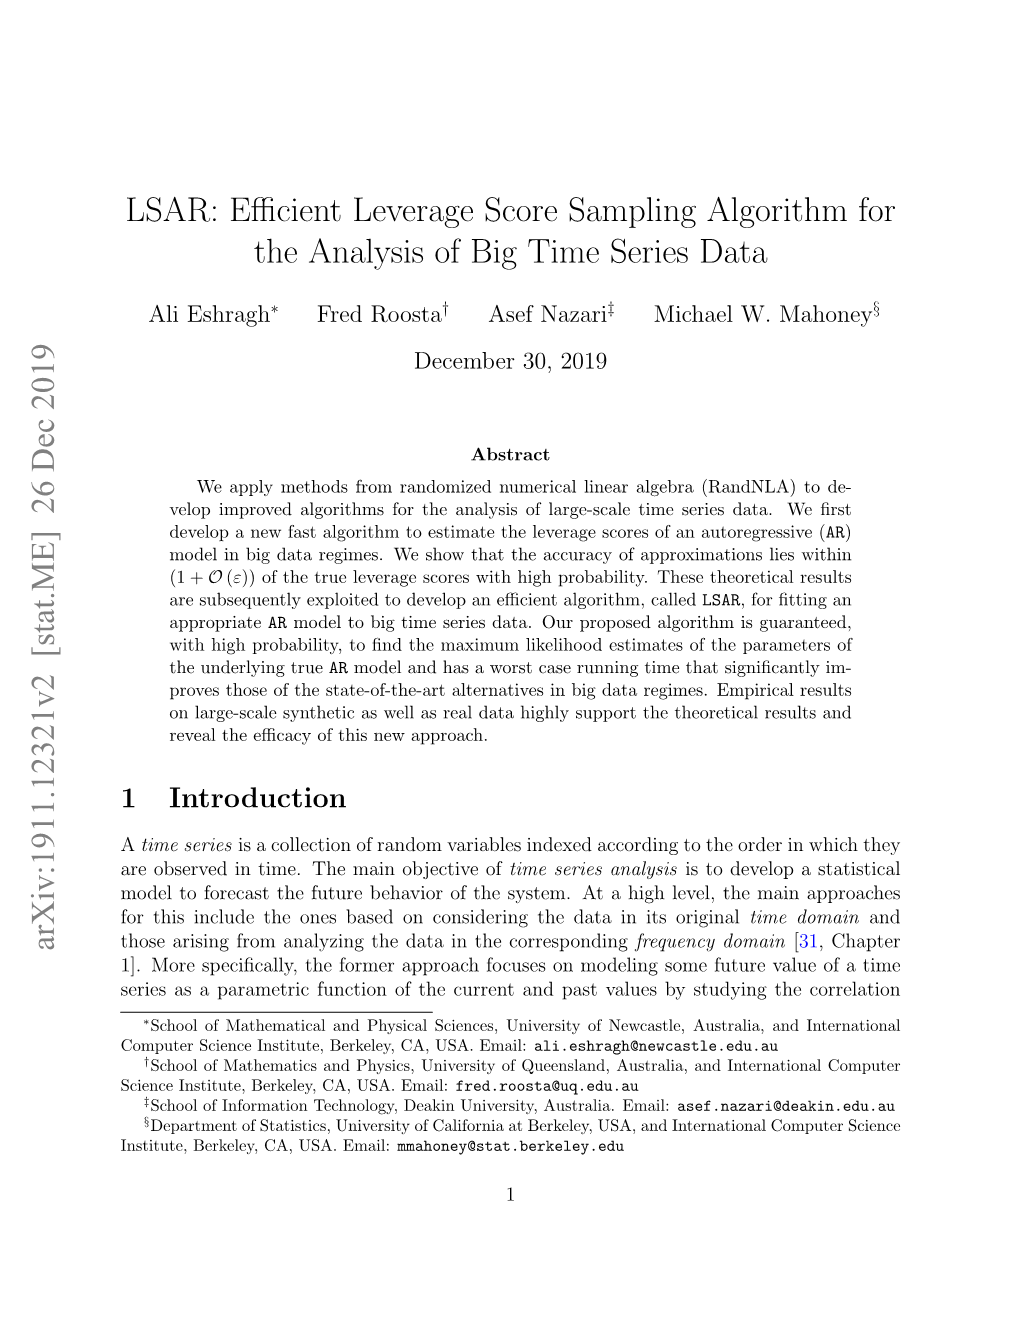 LSAR: Efficient Leverage Score Sampling Algorithm for the Analysis